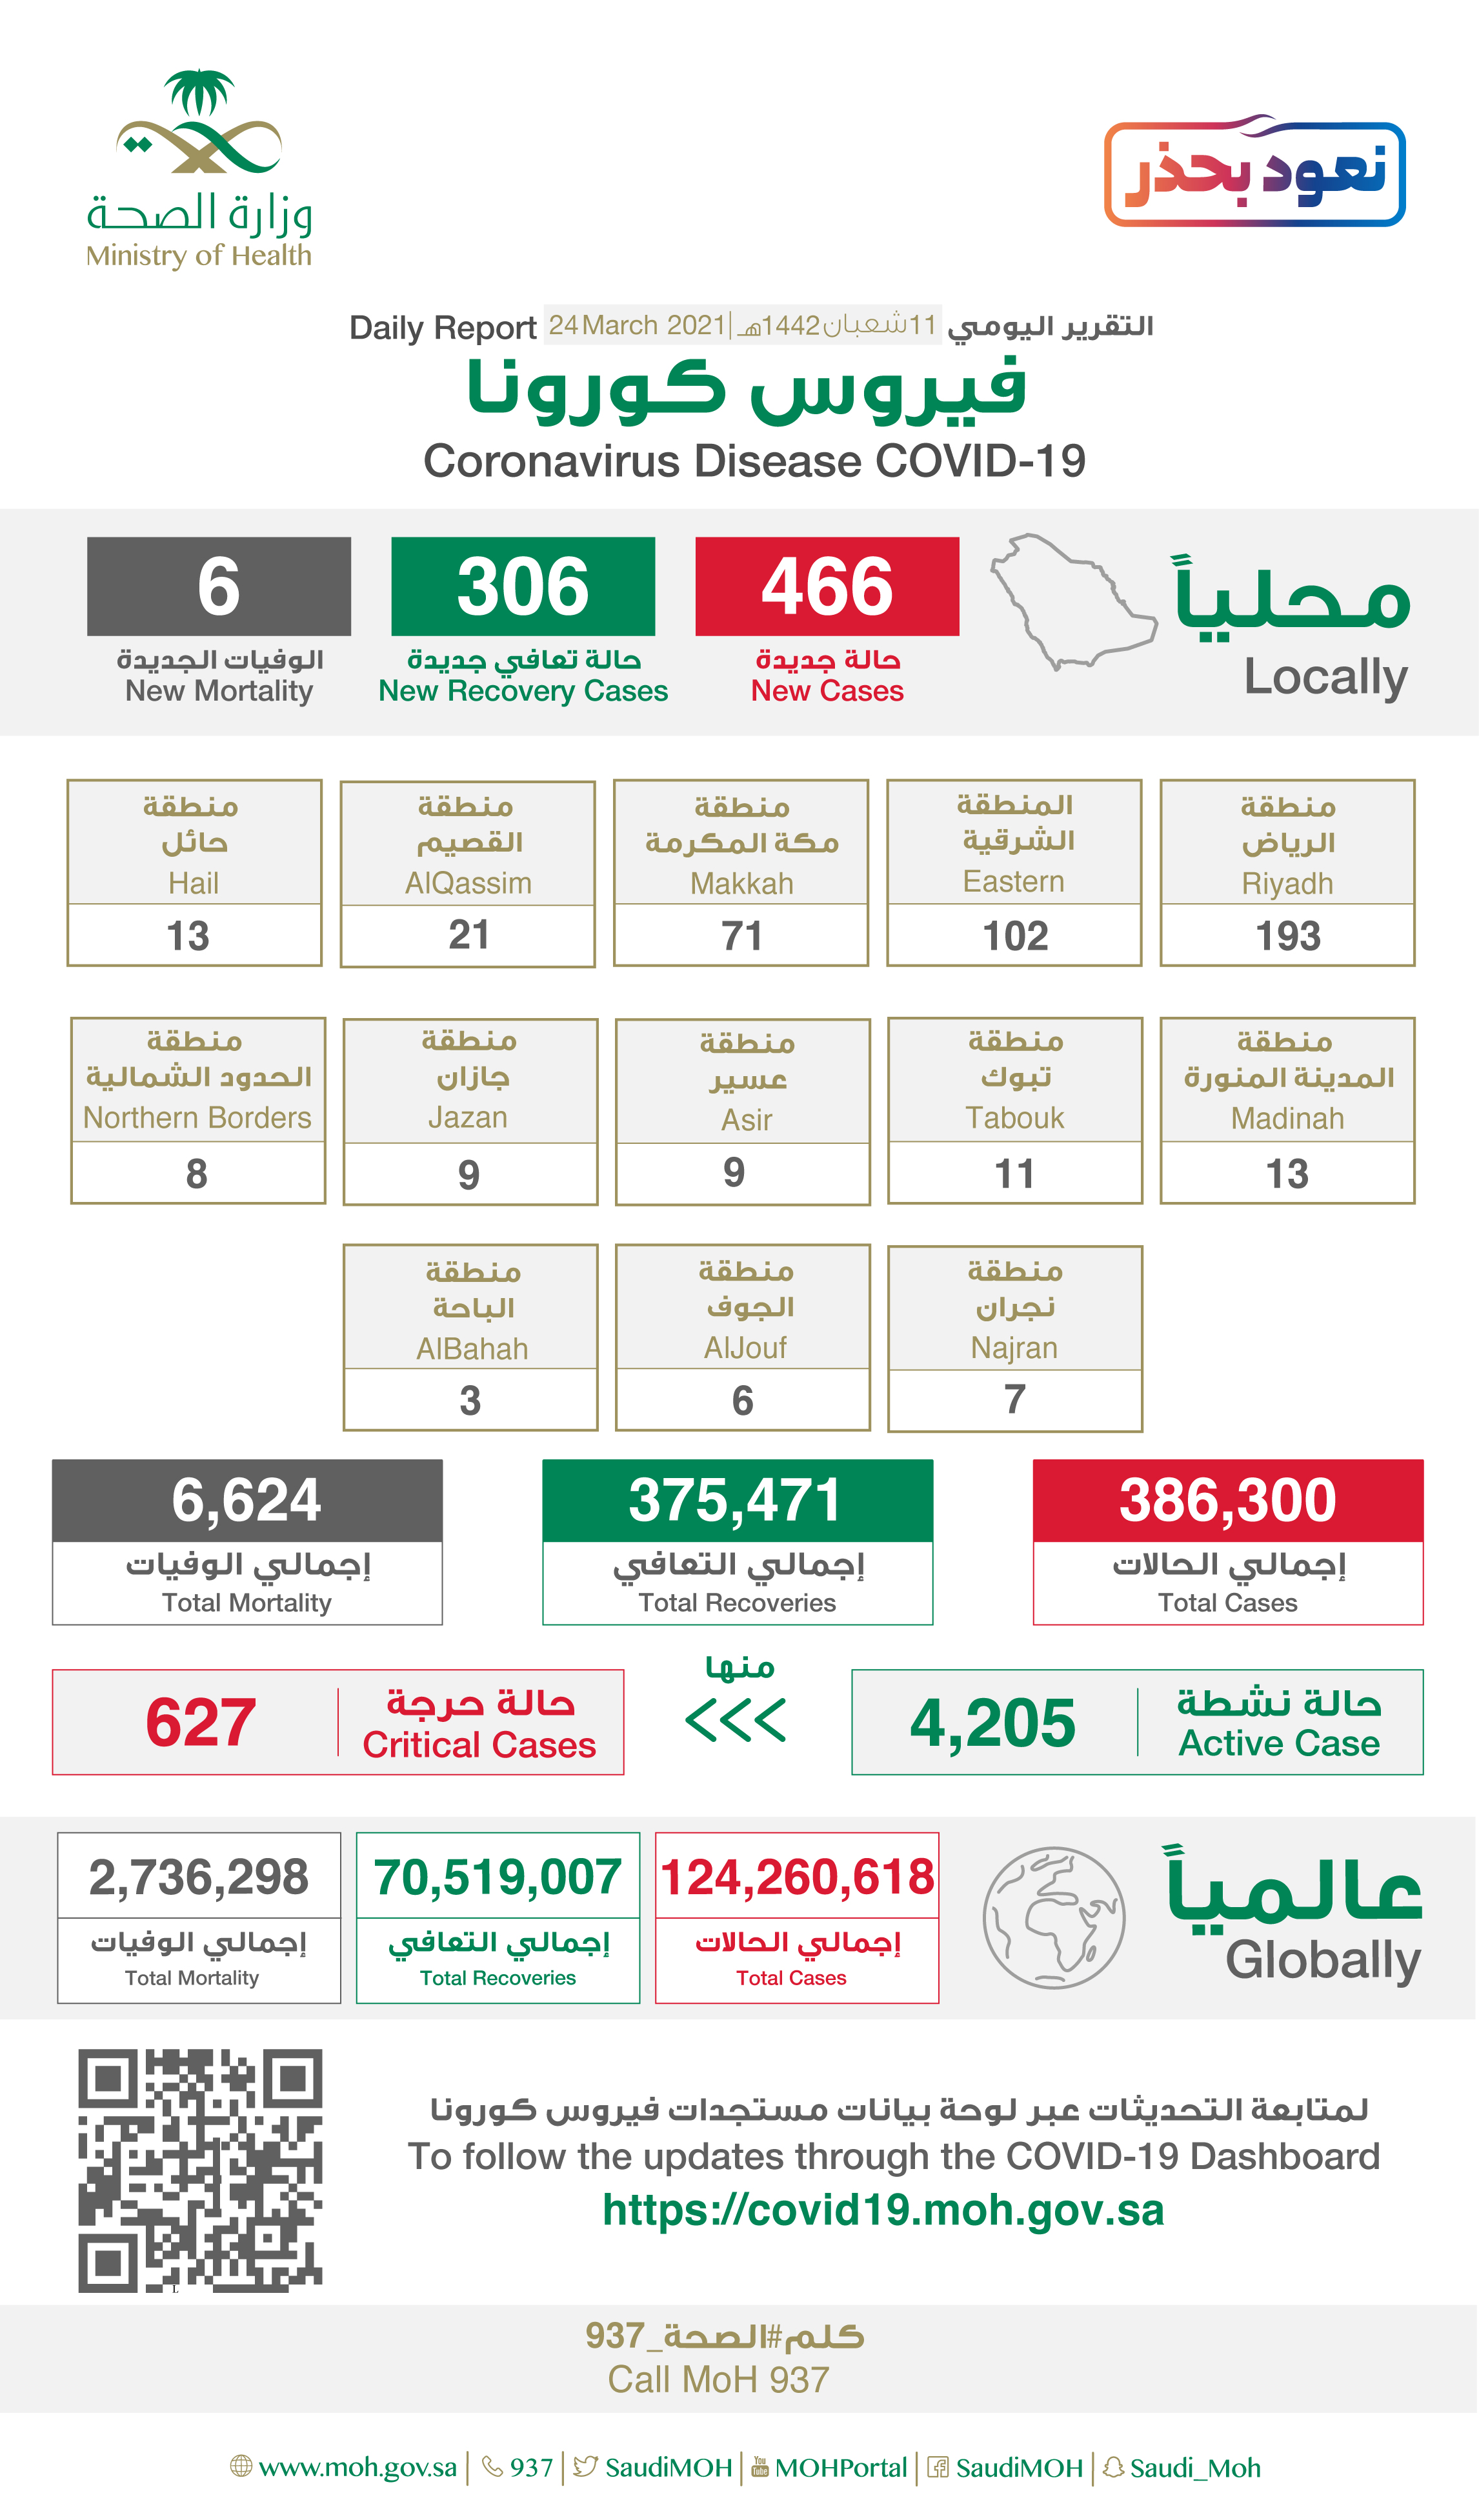 Saudi Arabia Coronavirus : Total Cases :386,300 , New Cases : 466, Cured : 375,471 , Deaths: 6,624, Active Cases : 4,205